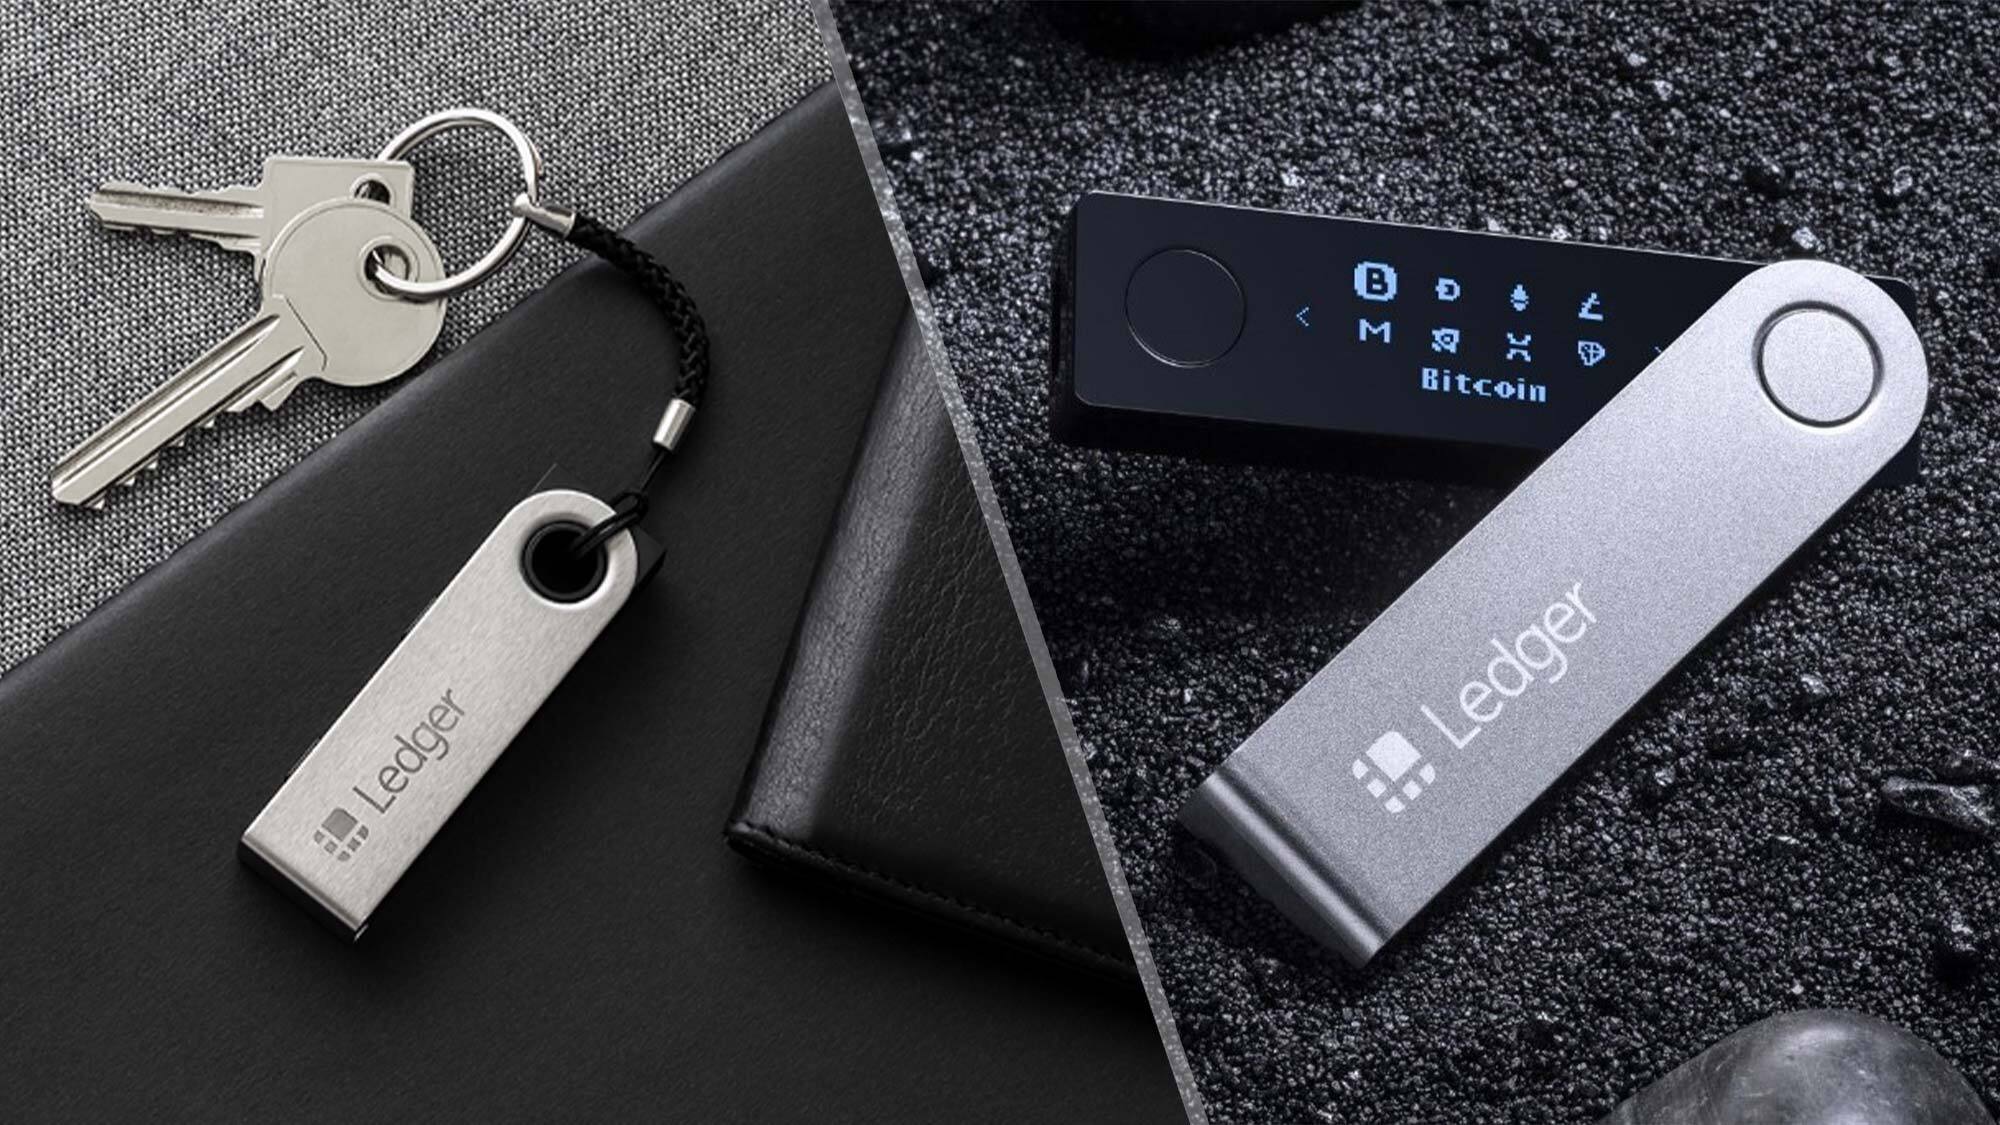 Shop for Ledger Nano S Plus Hardware Crypto Wallet - Blue | Virgin Megastore UAE